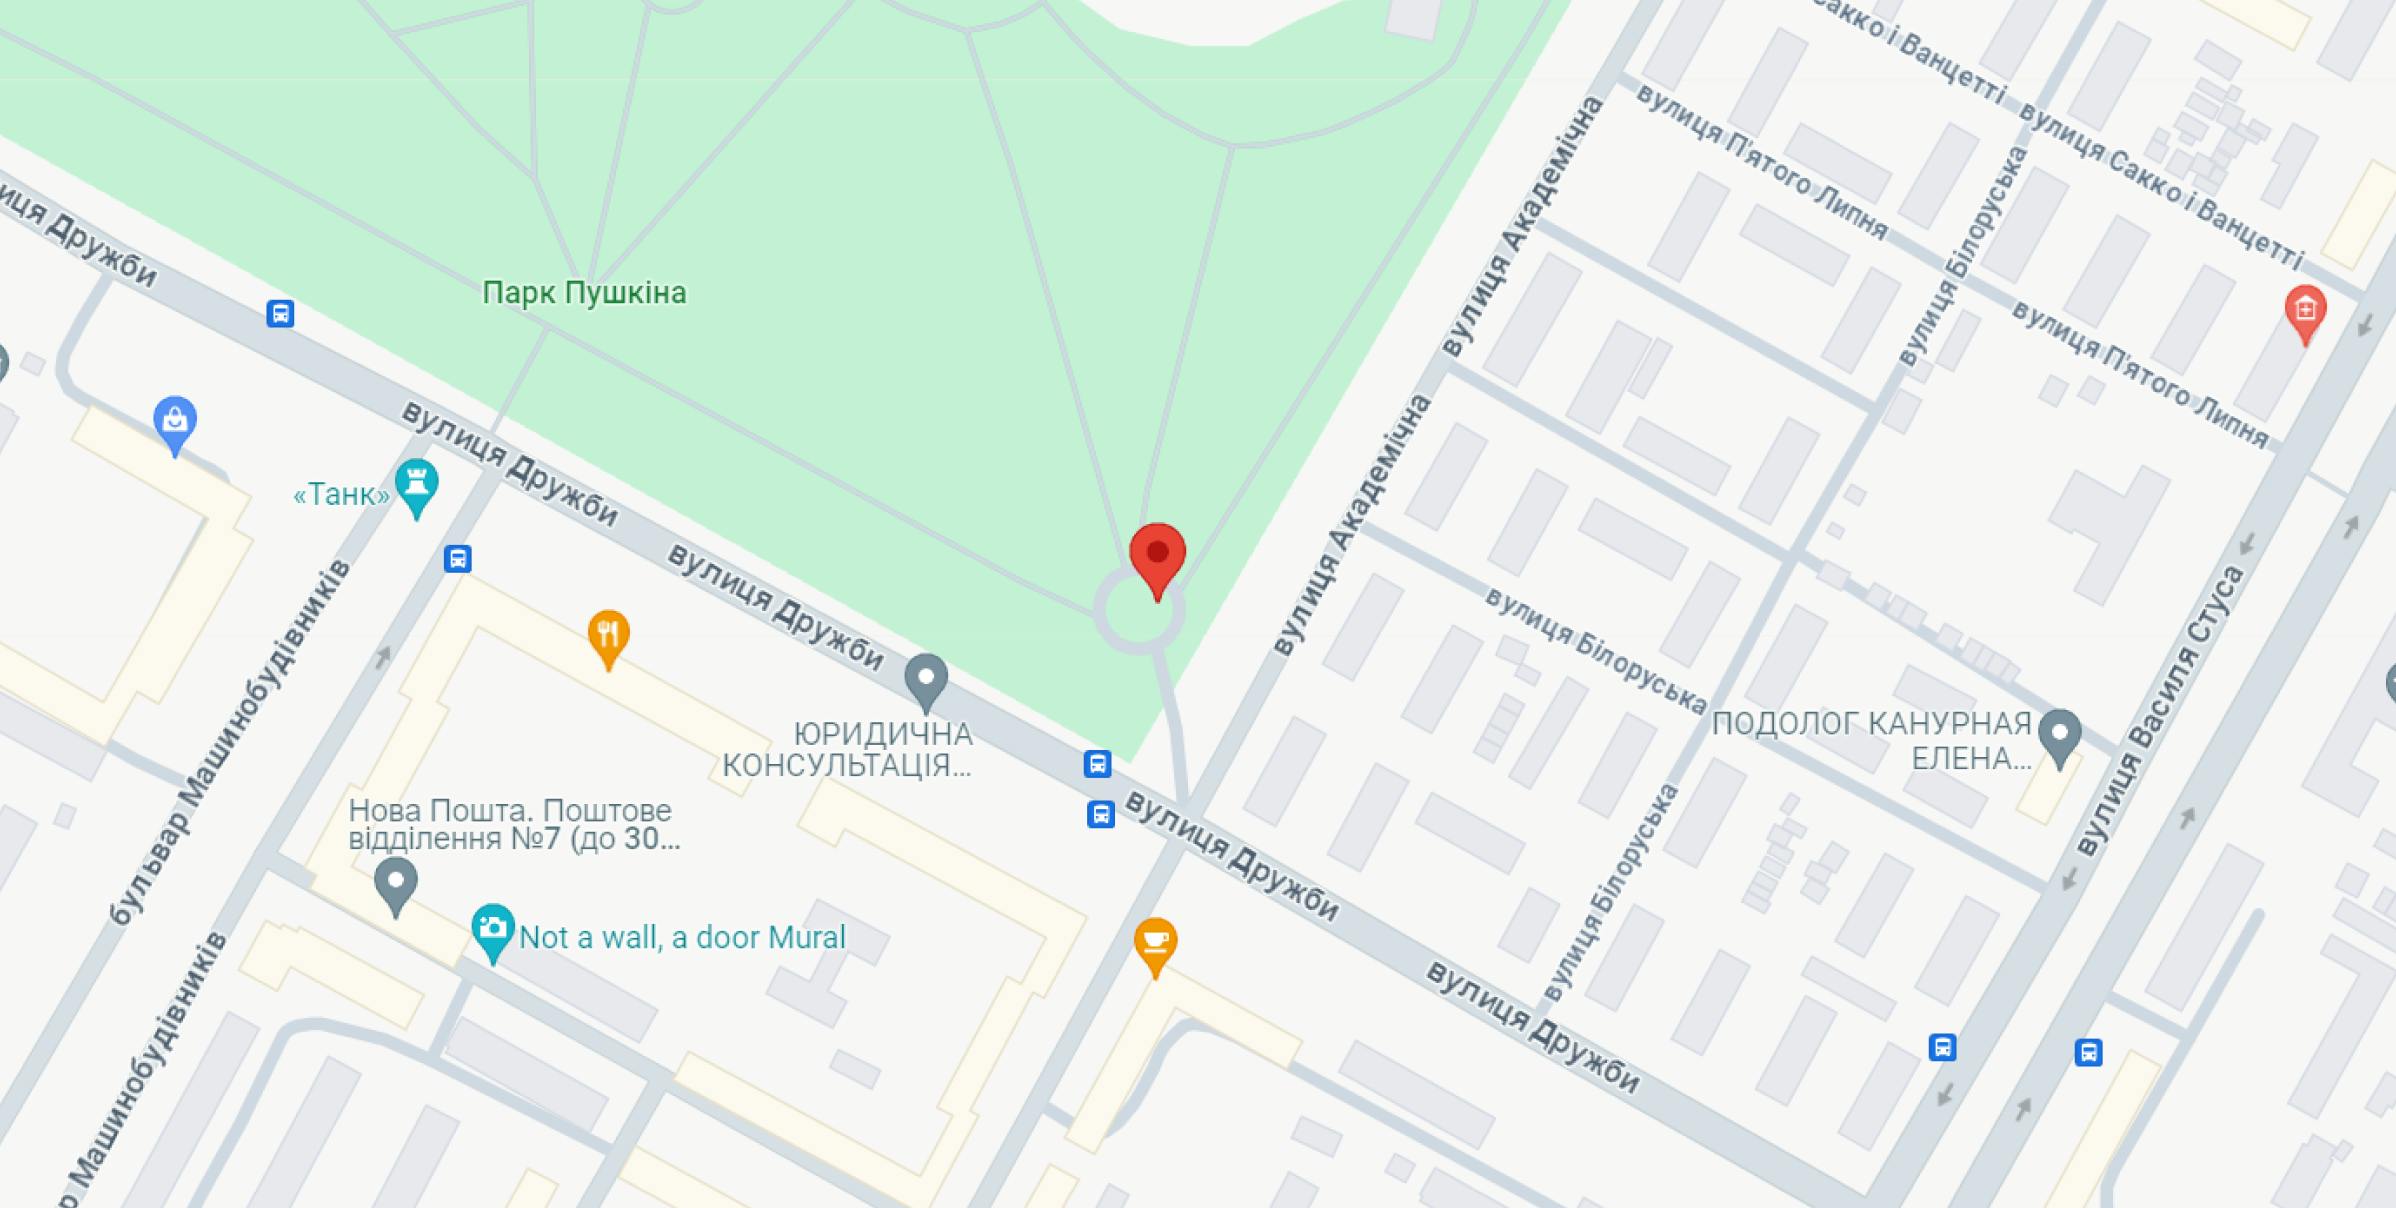 На зображенні - карта м.Краматорськ з відміткою місця для старту забігів Runday в парку Пушкіна